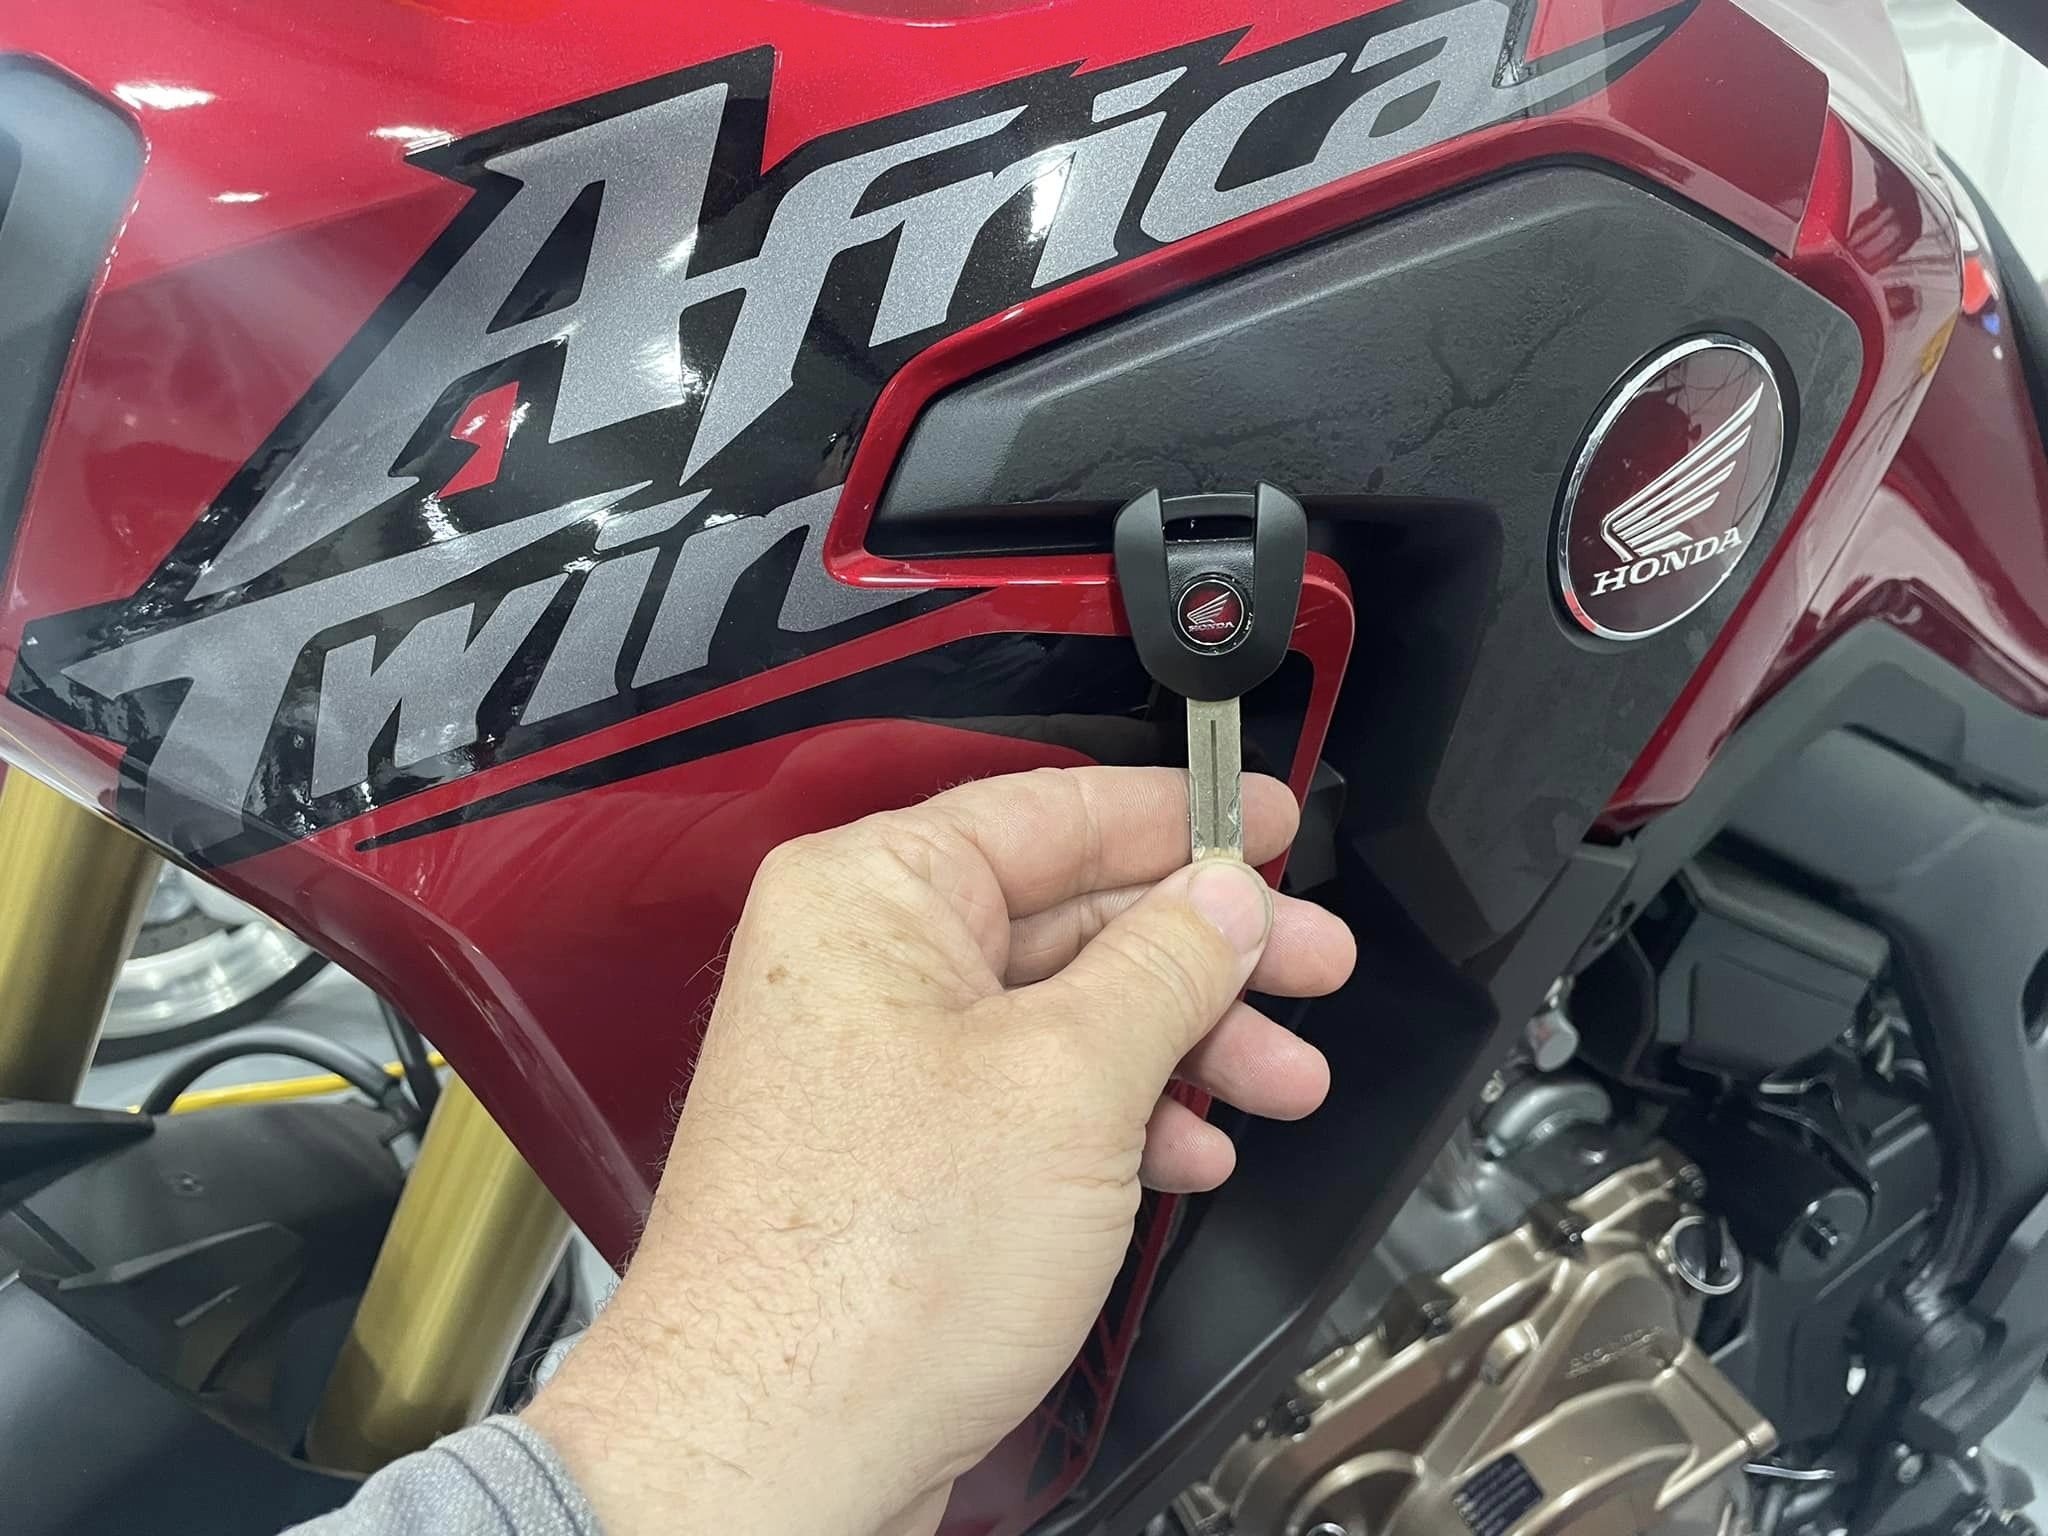 brighton atv motorcycle key replacement